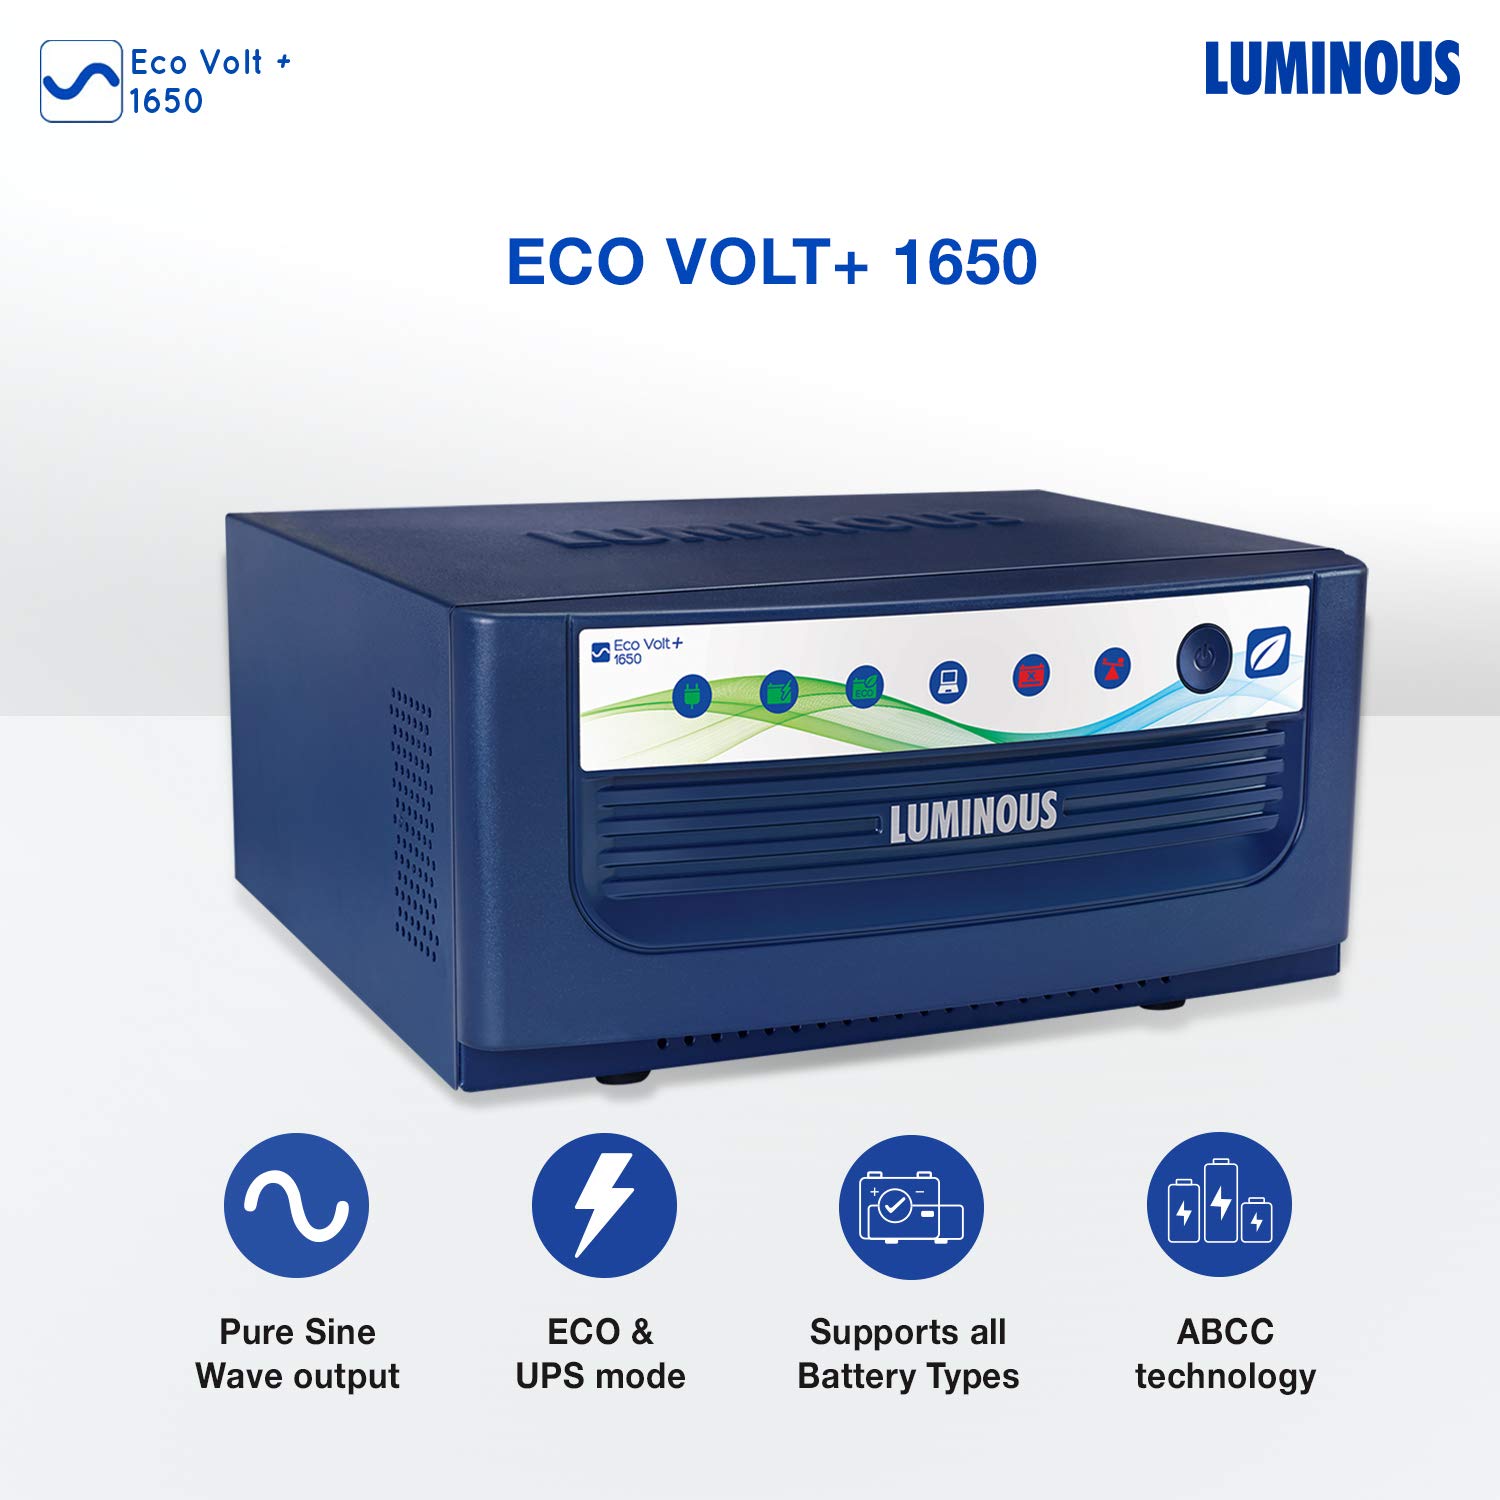 Luminous Eco Watt Neo 1650 Square Wave 1500/24V Inverter for Home